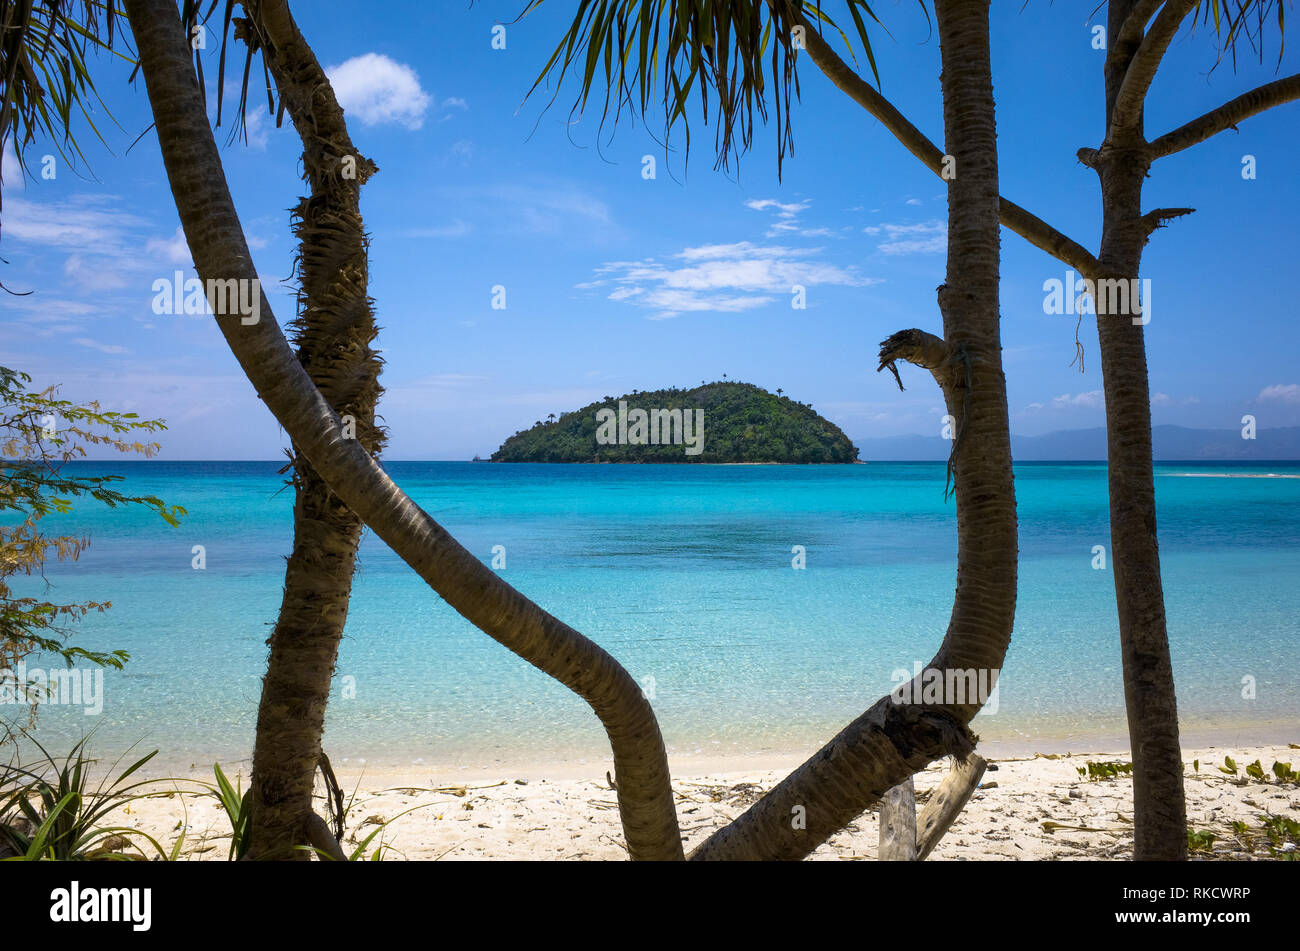 Tiny Island island in Turquoise sea, View Through Jungle Trees - Bonbon Beach - Romblon, Philippines Stock Photo